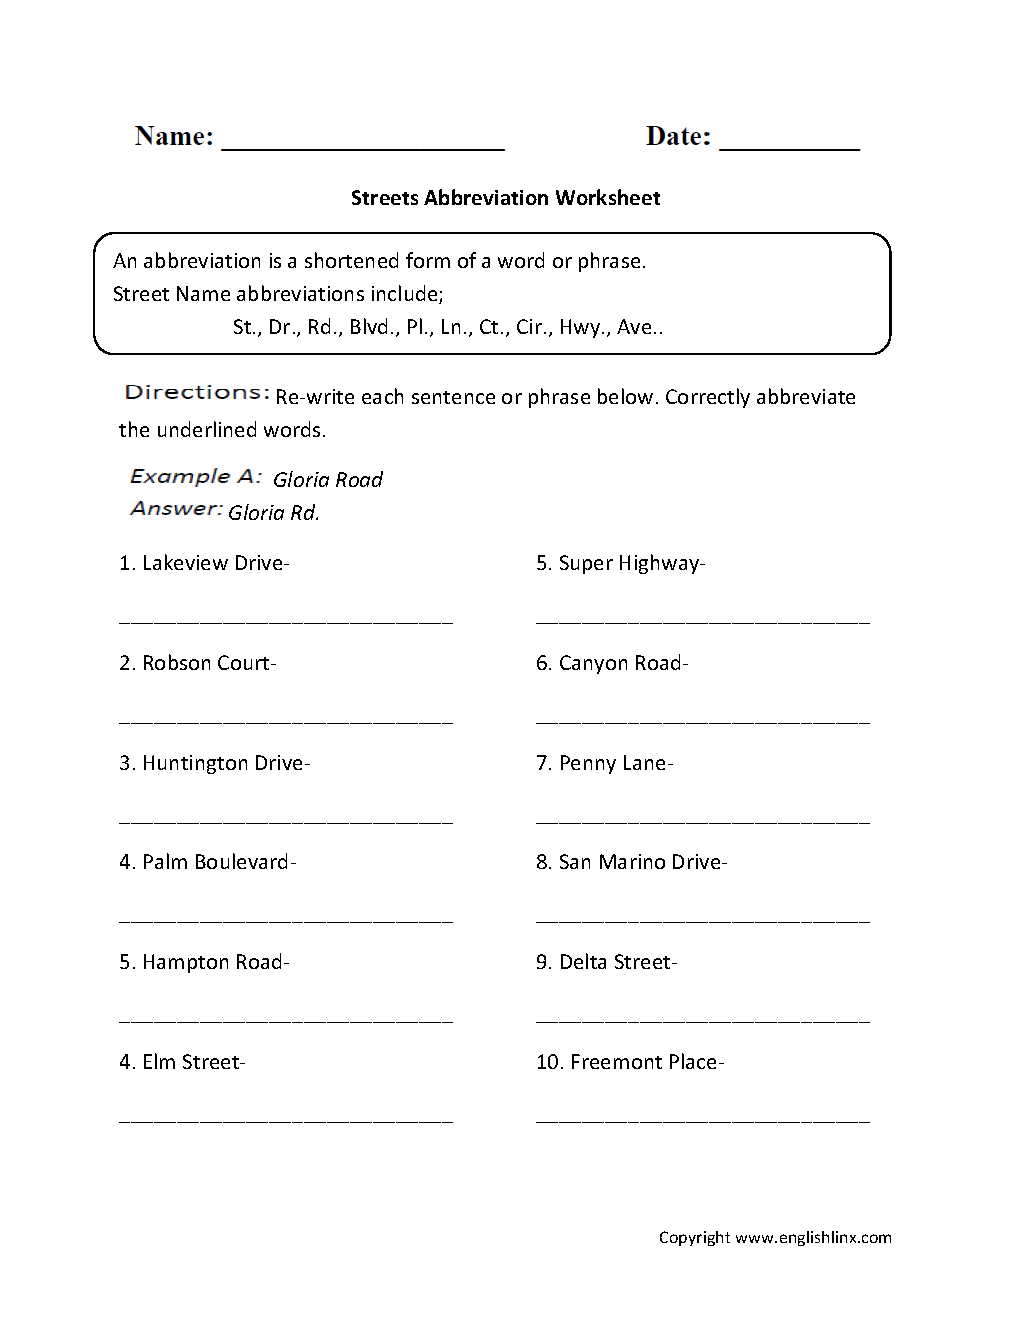 Streets Abbreviation Worksheets